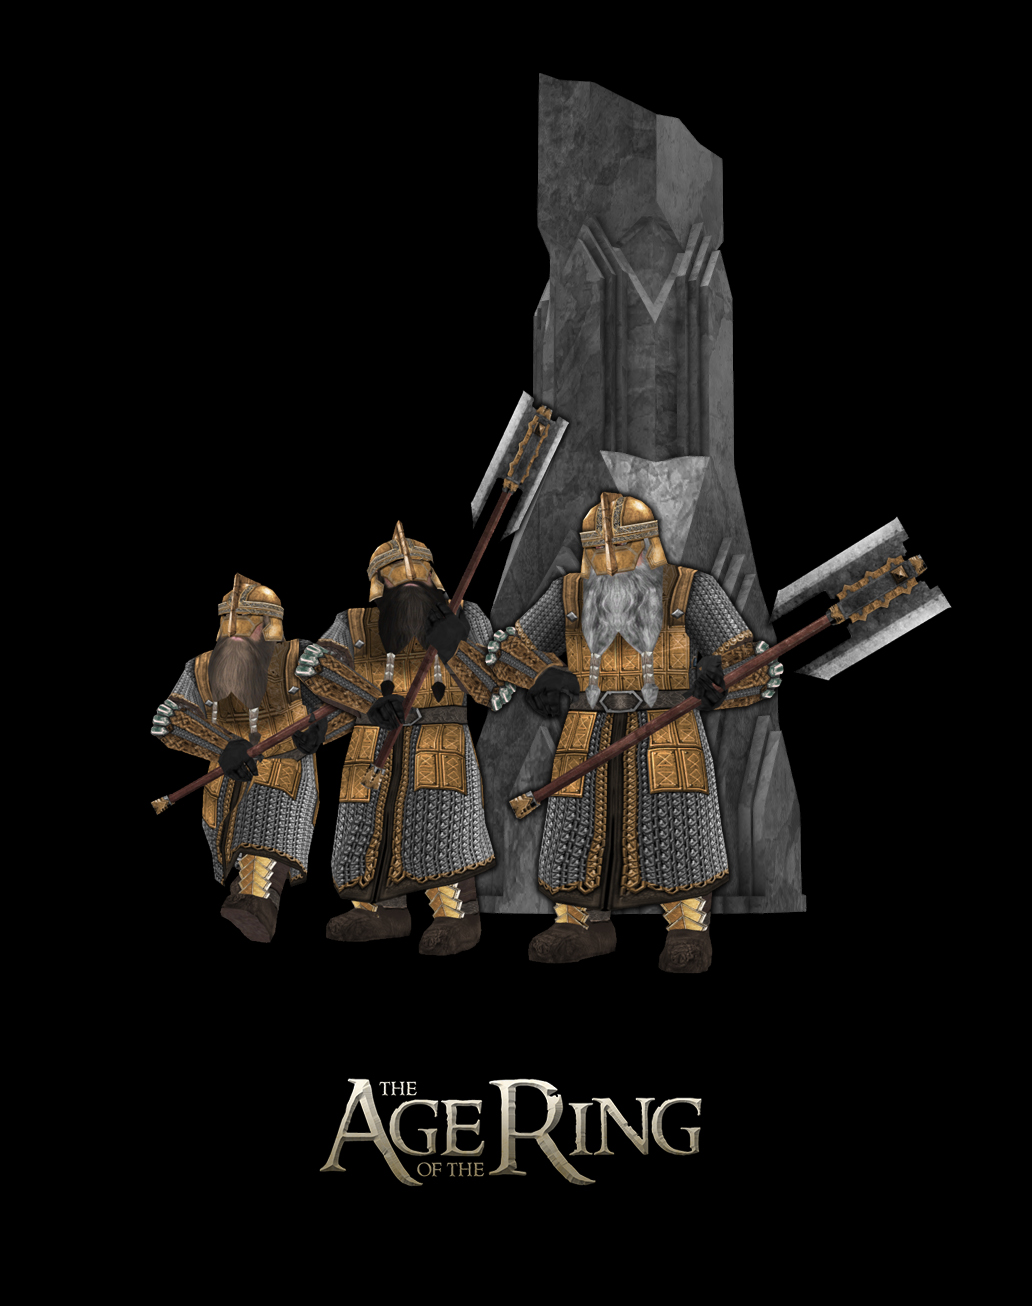 Guards of Khazad-dûm - Dwarves - Third Age 1.3 魔戒第三紀元 1.3